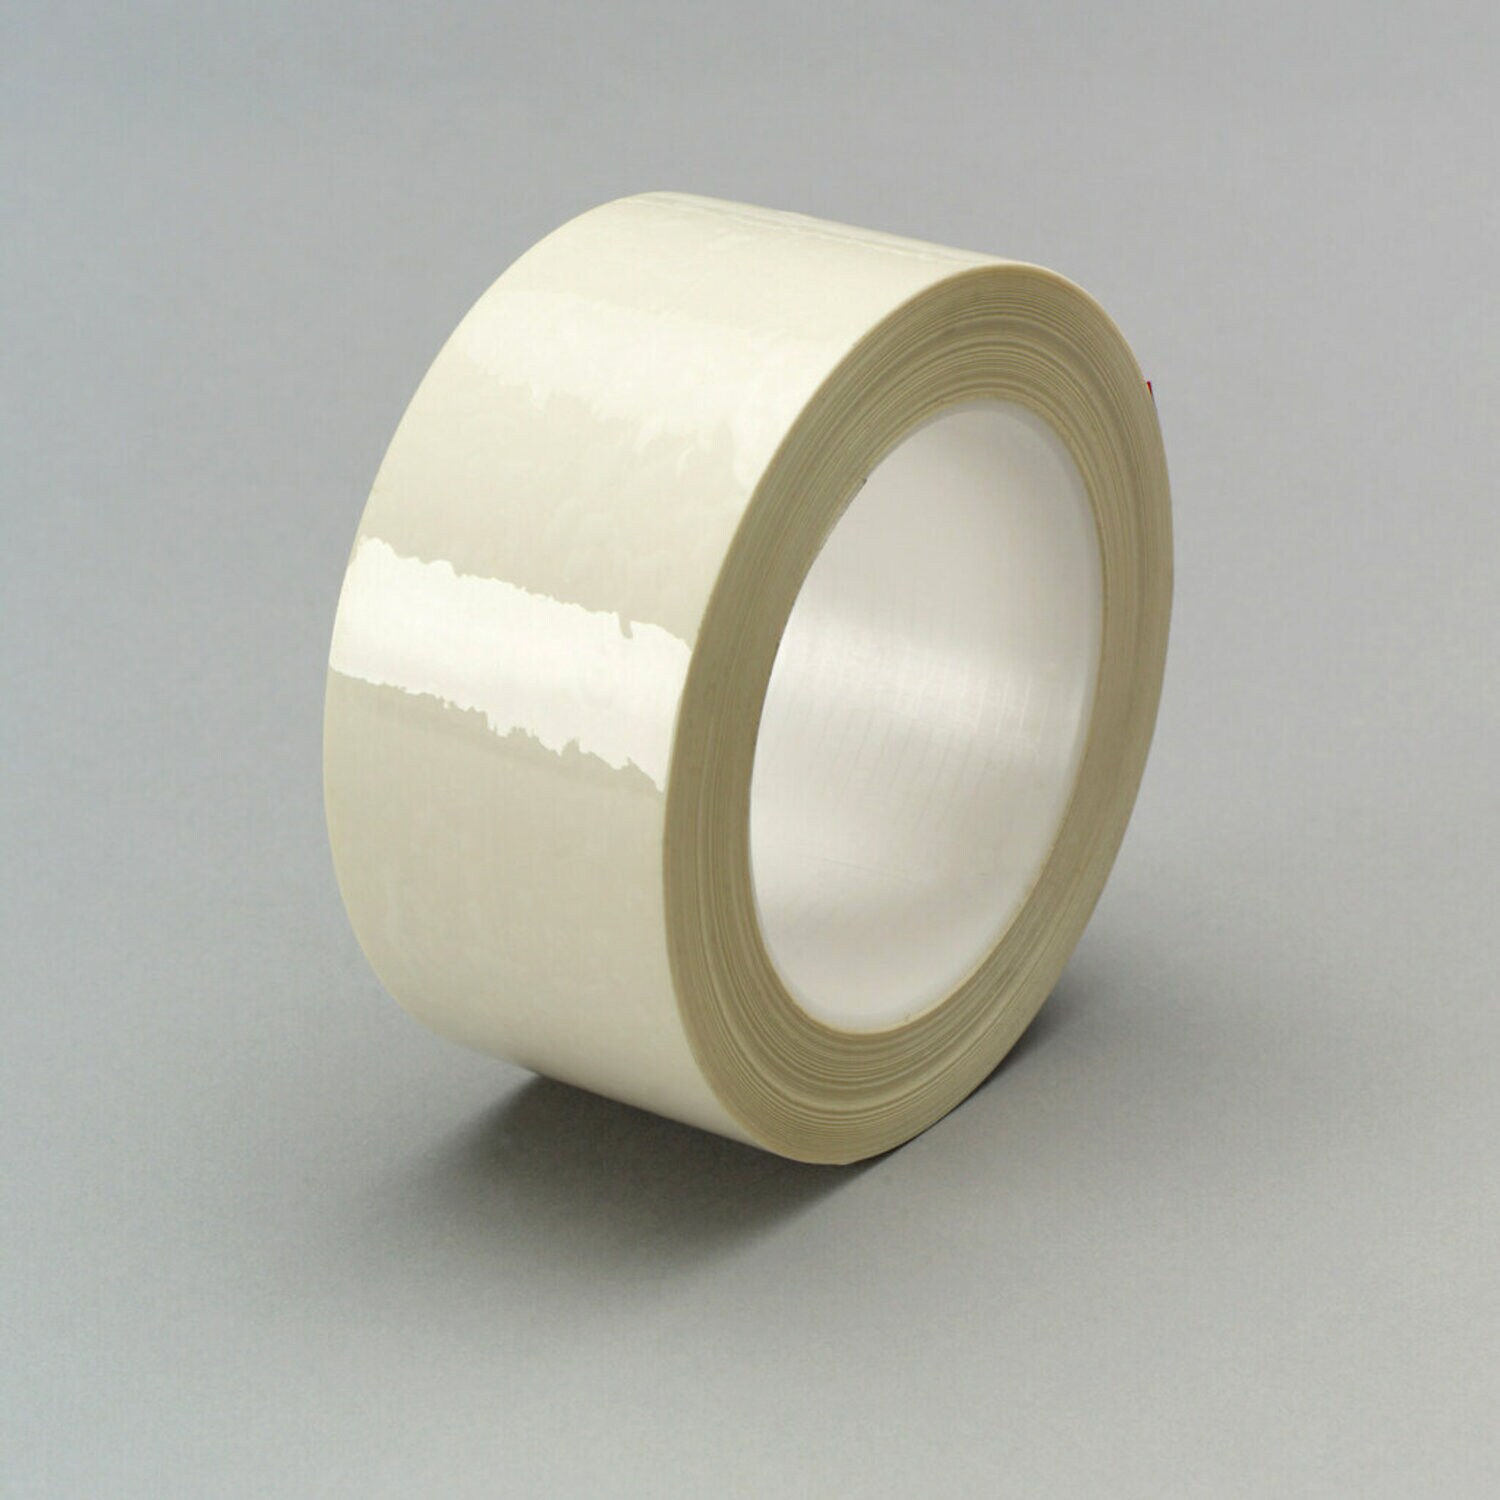 7000048412 - 3M High Temperature Nylon Film Tape 855, White, 2 in x 72 yd, 3.6 mil,
24 rolls per case